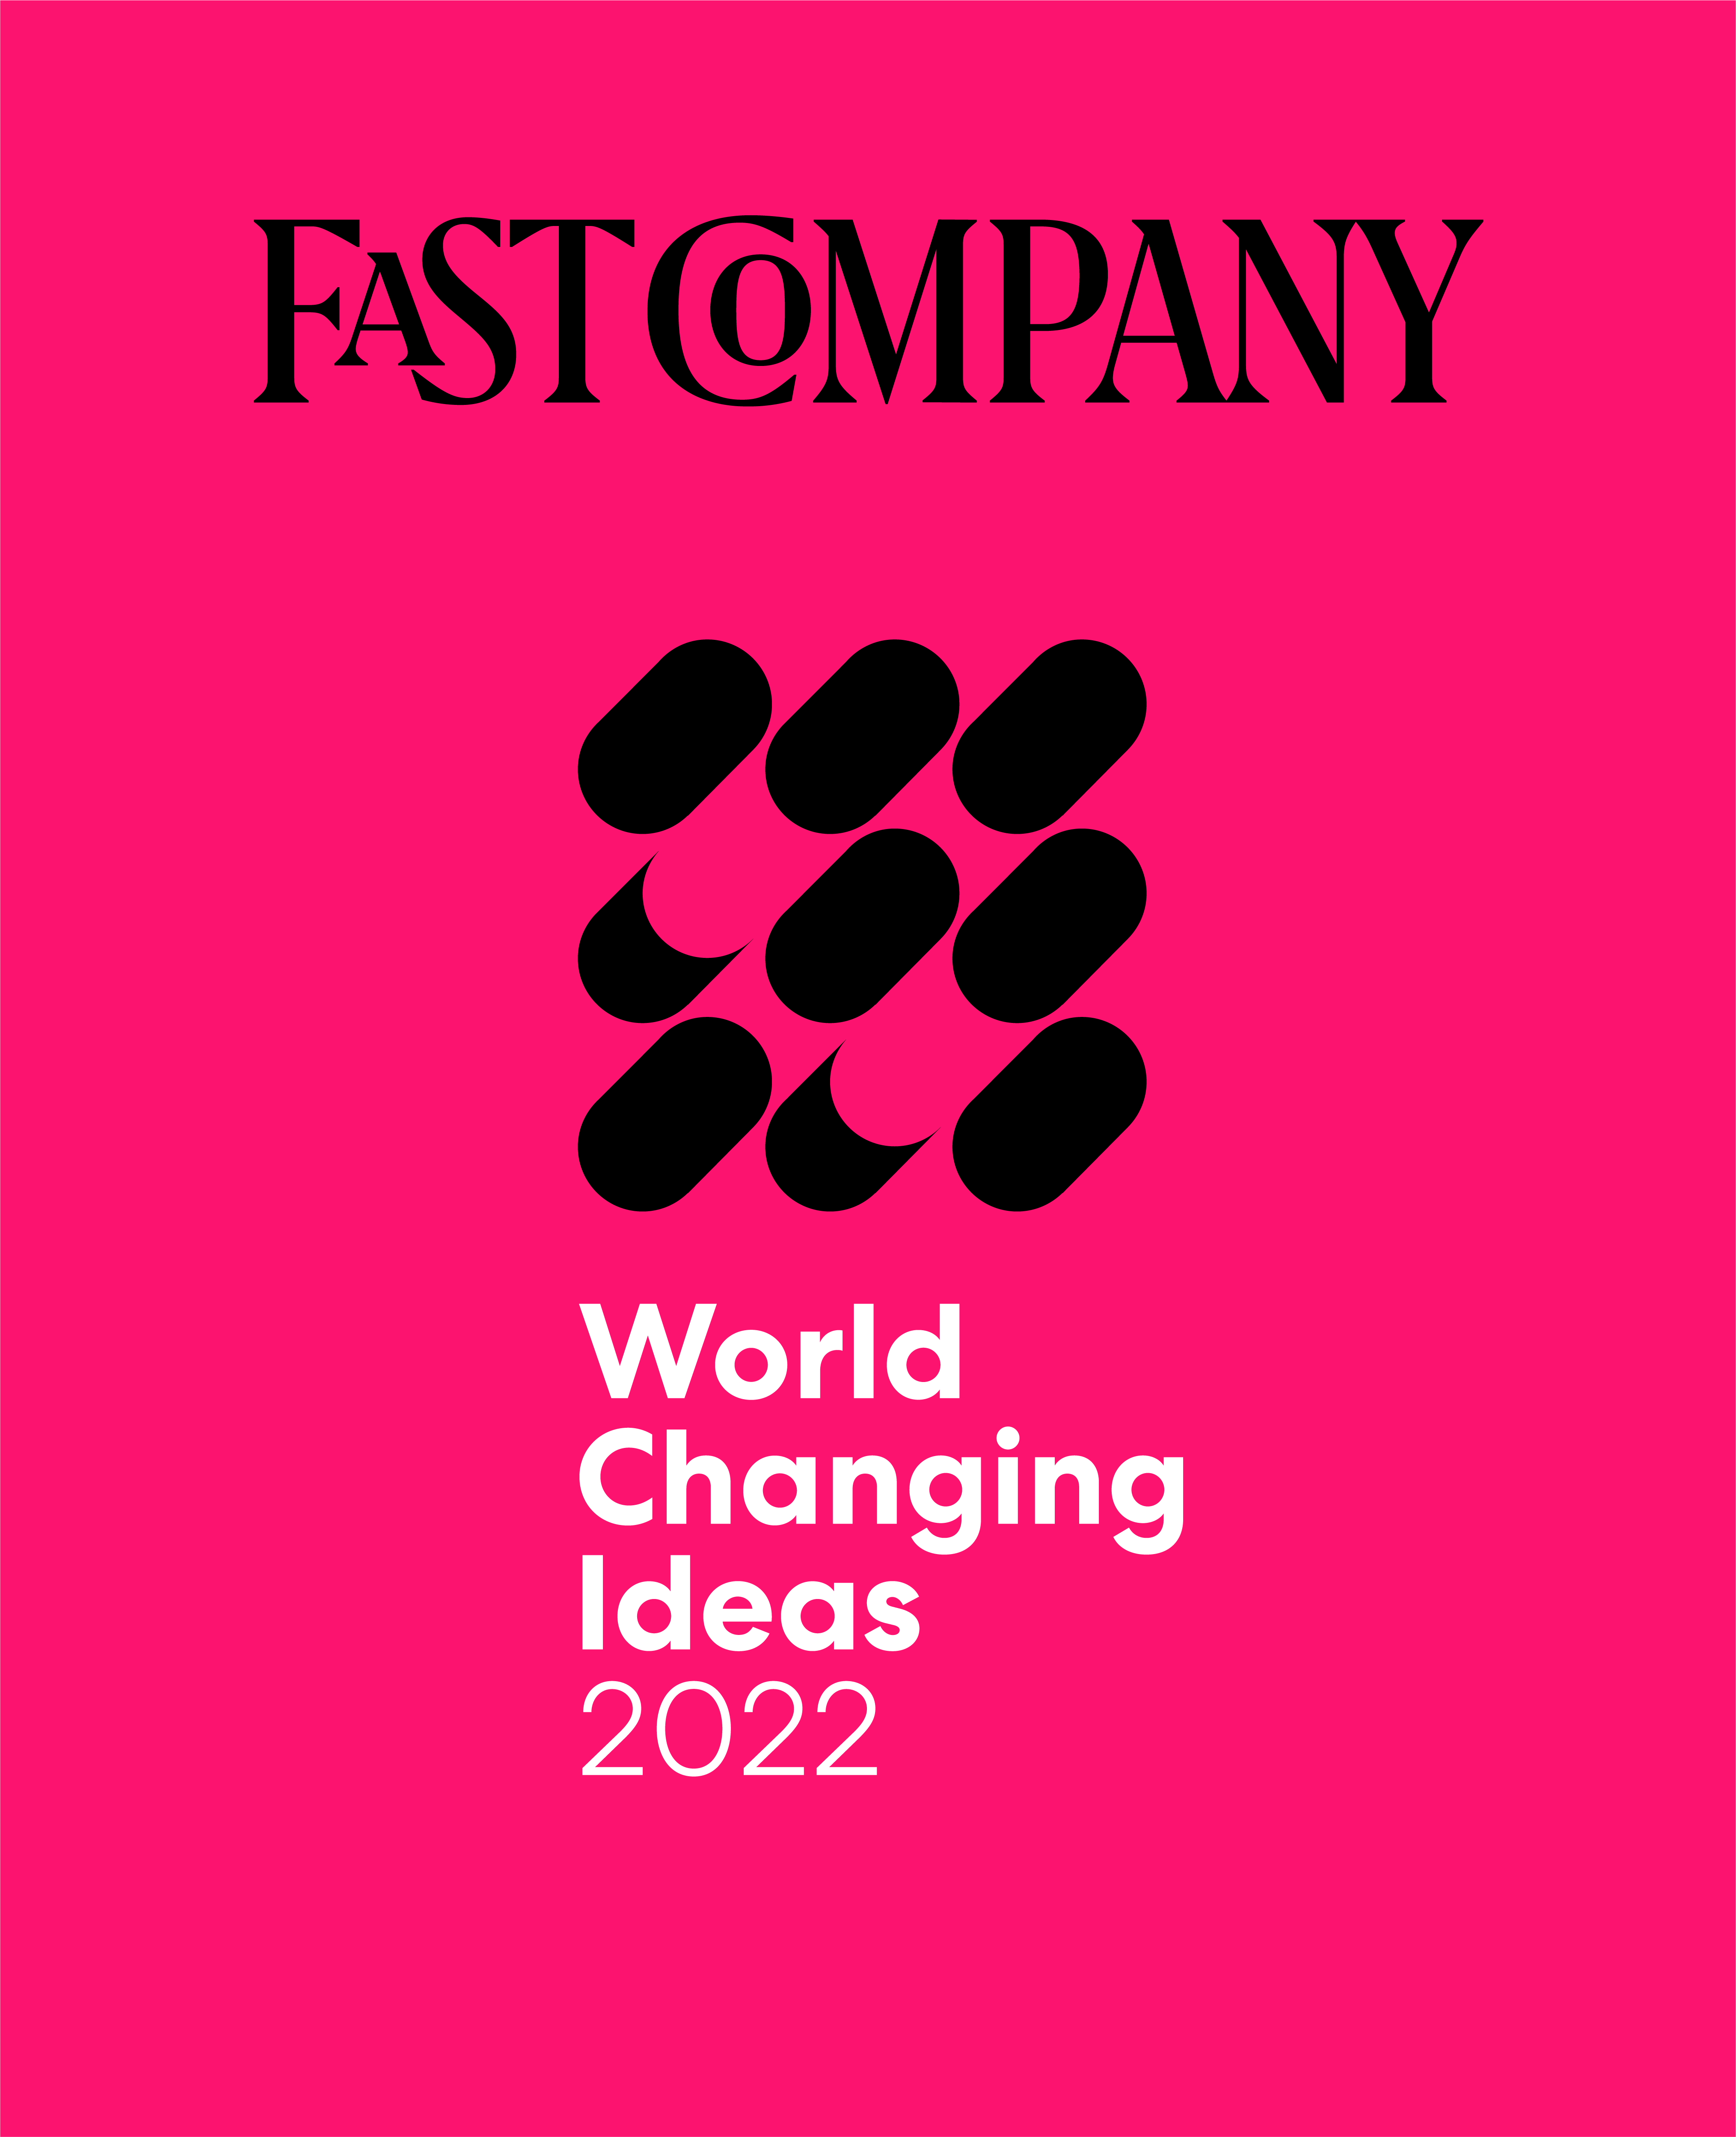 Finalista do Fast Company World Changing Ideas, 2022